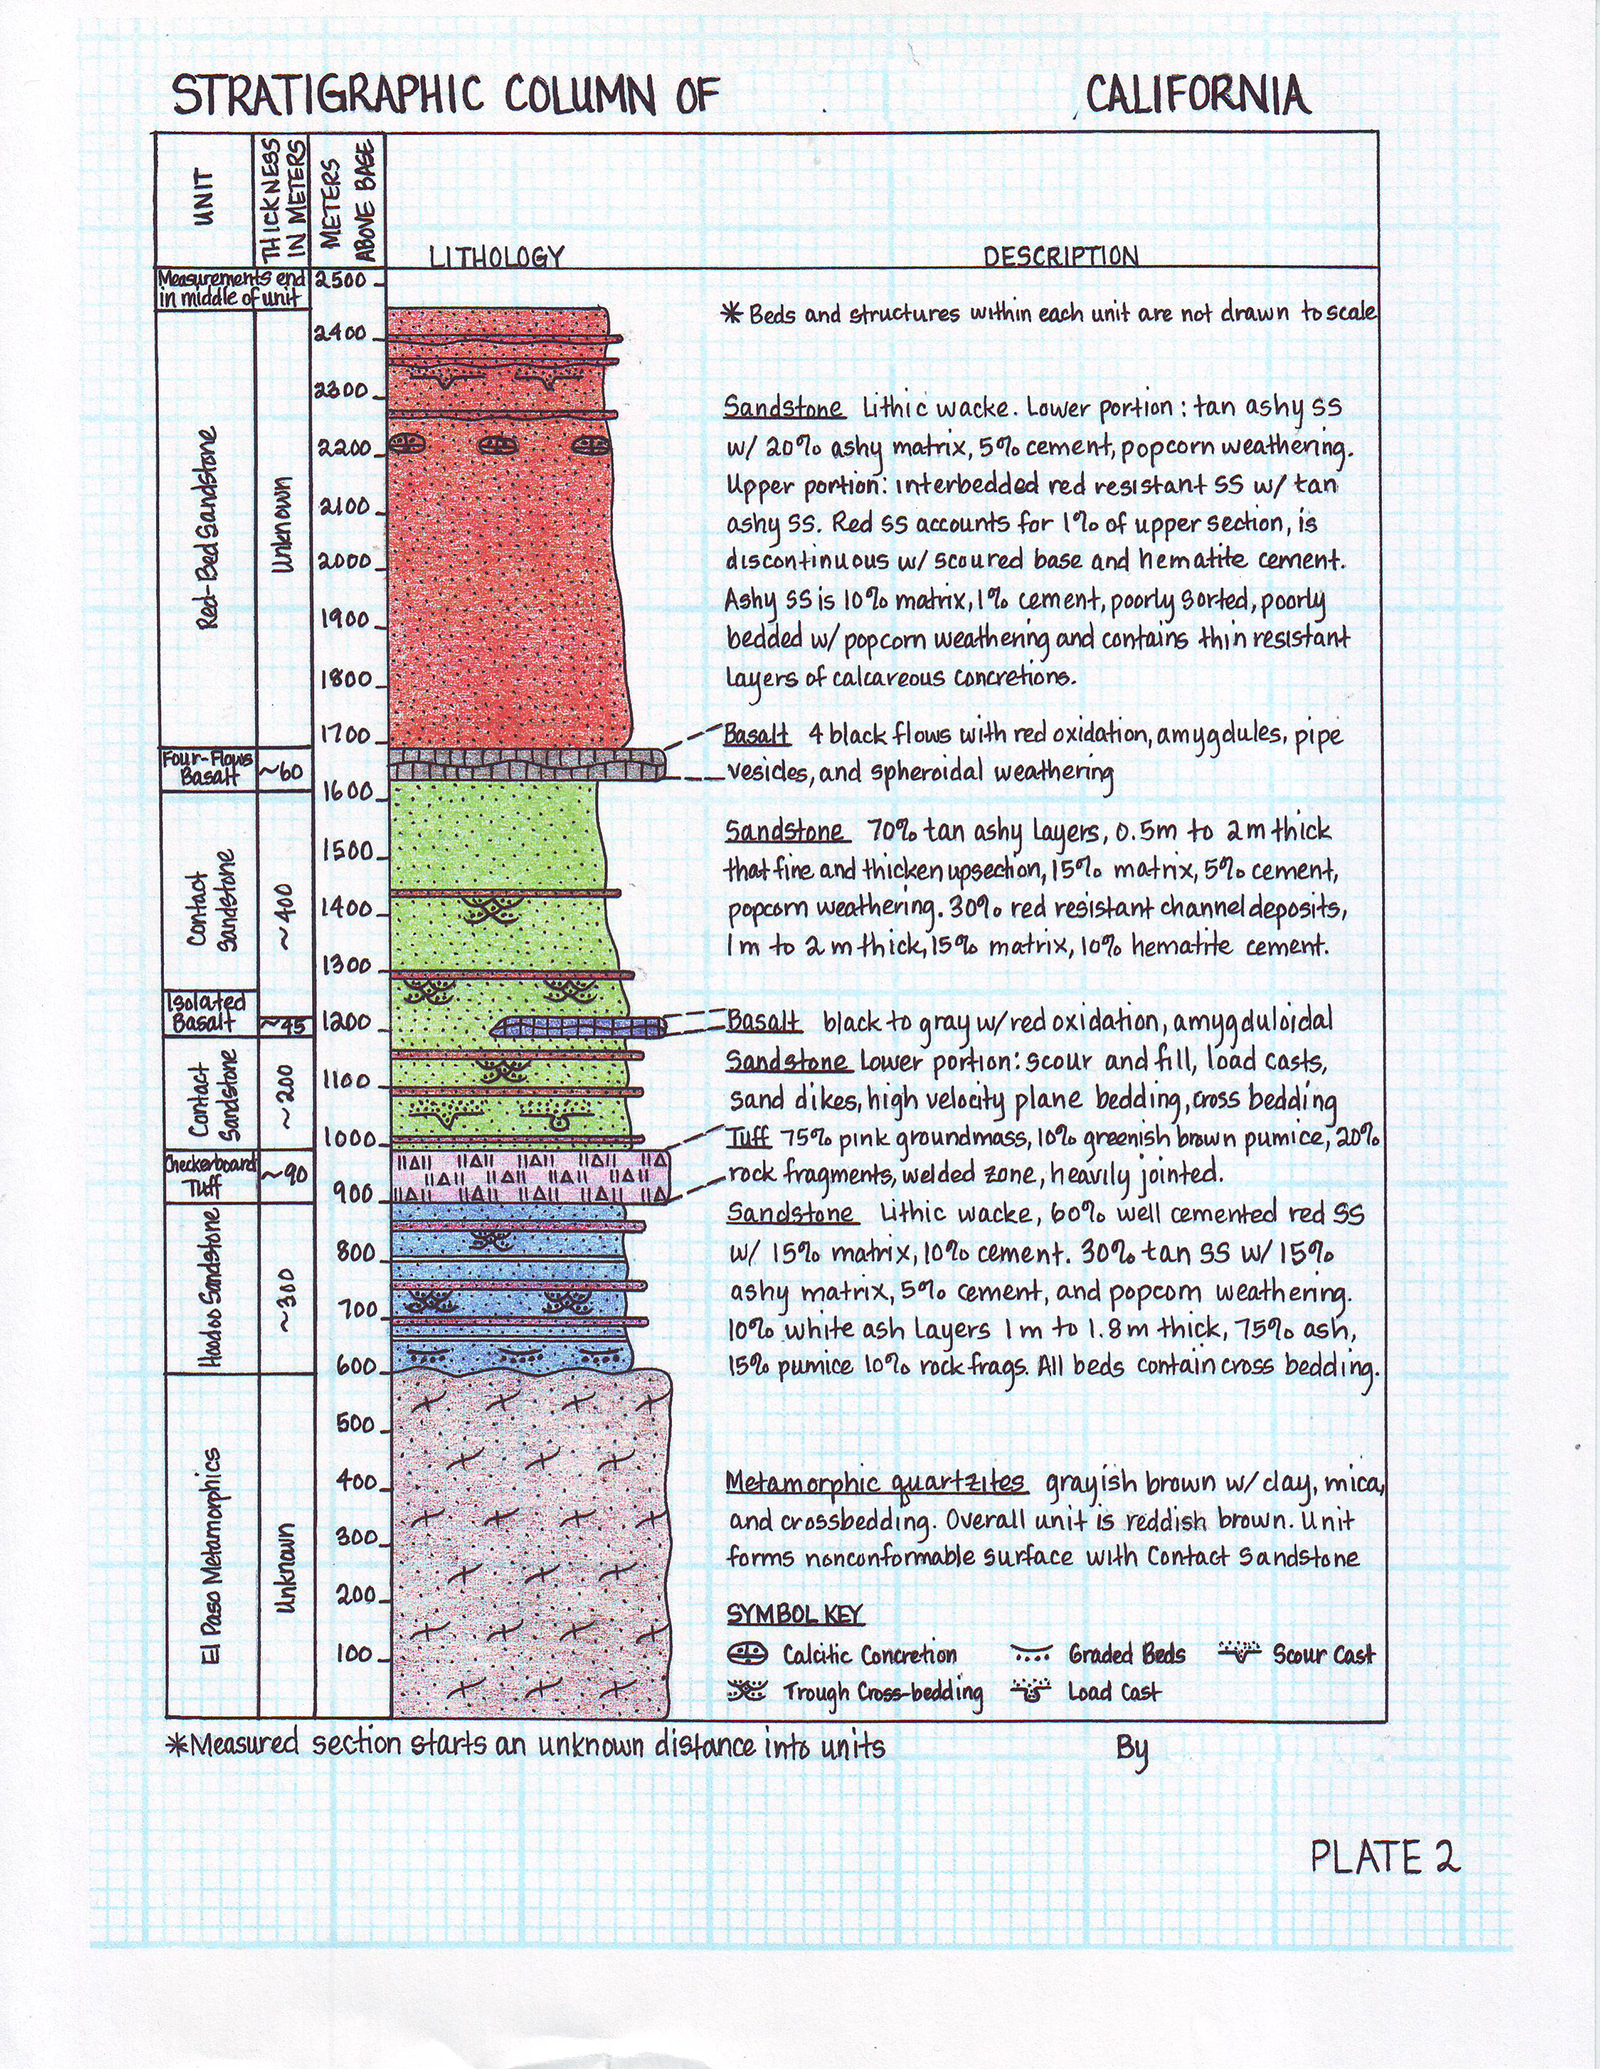 Grain Size Chart Geology